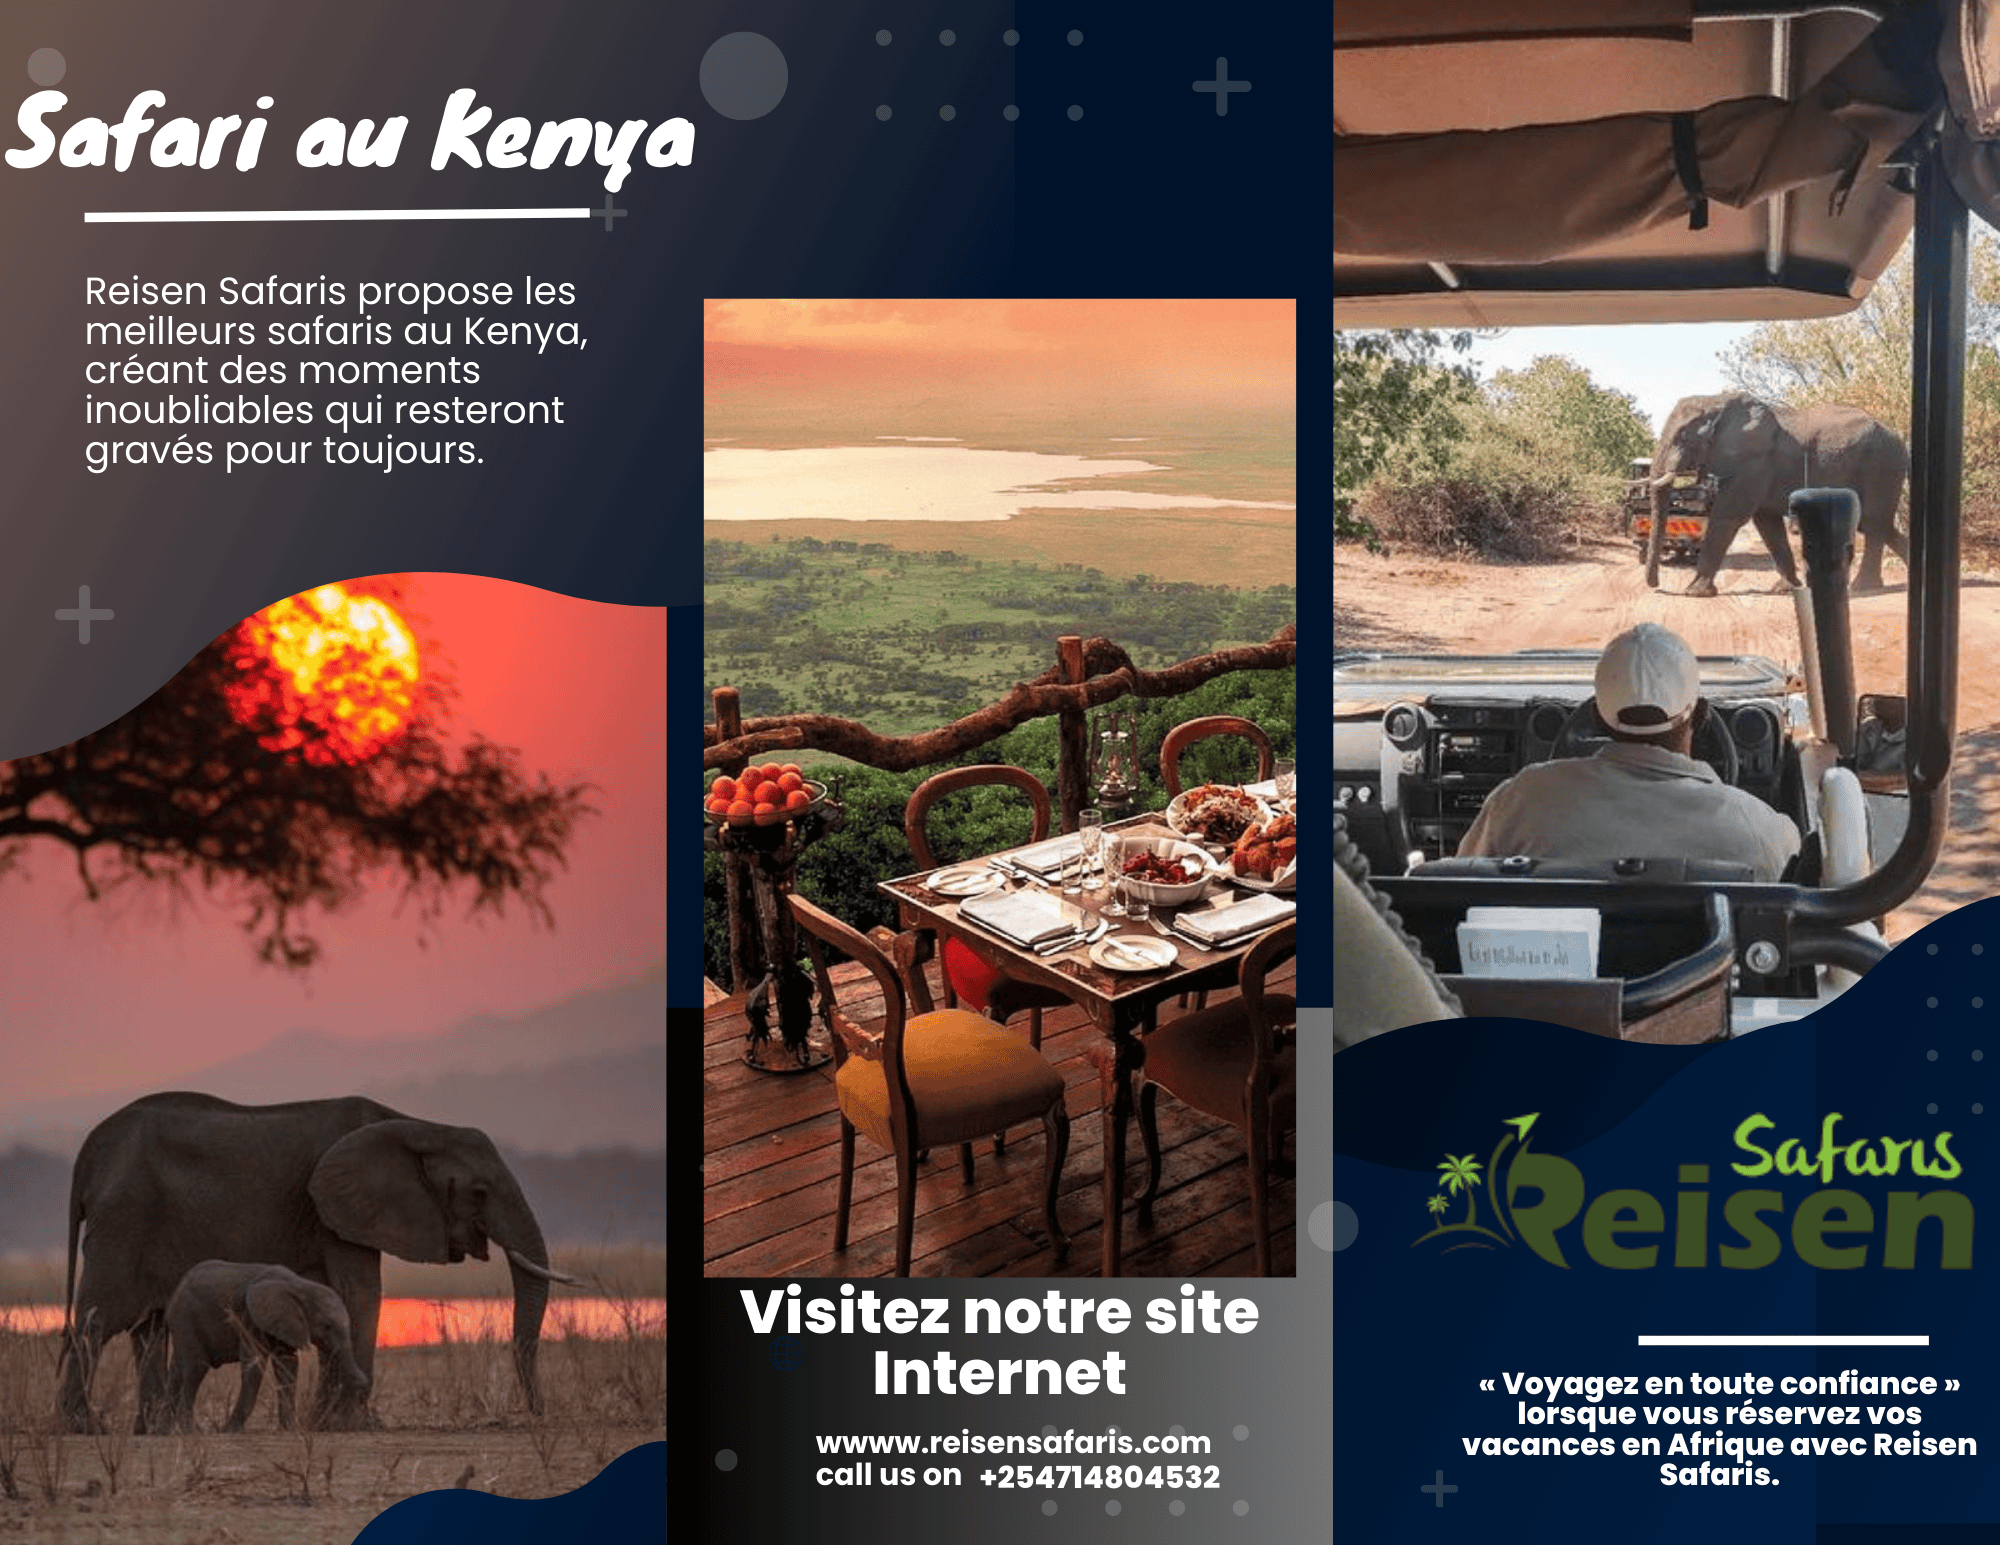 Meilleur safari au Kenya